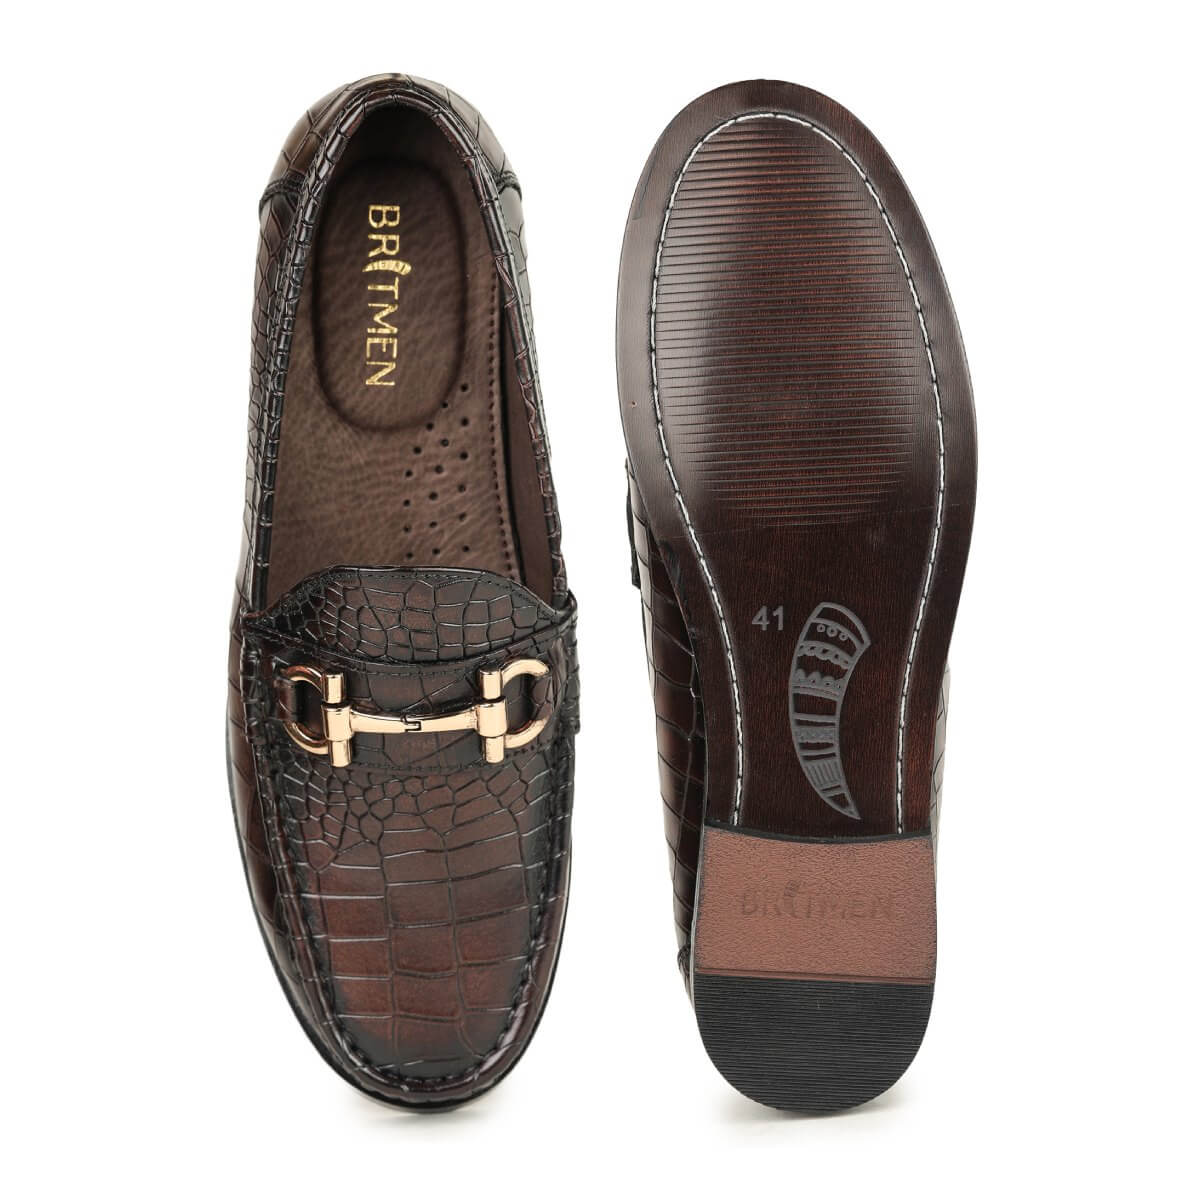 crocs loafer shoes brown